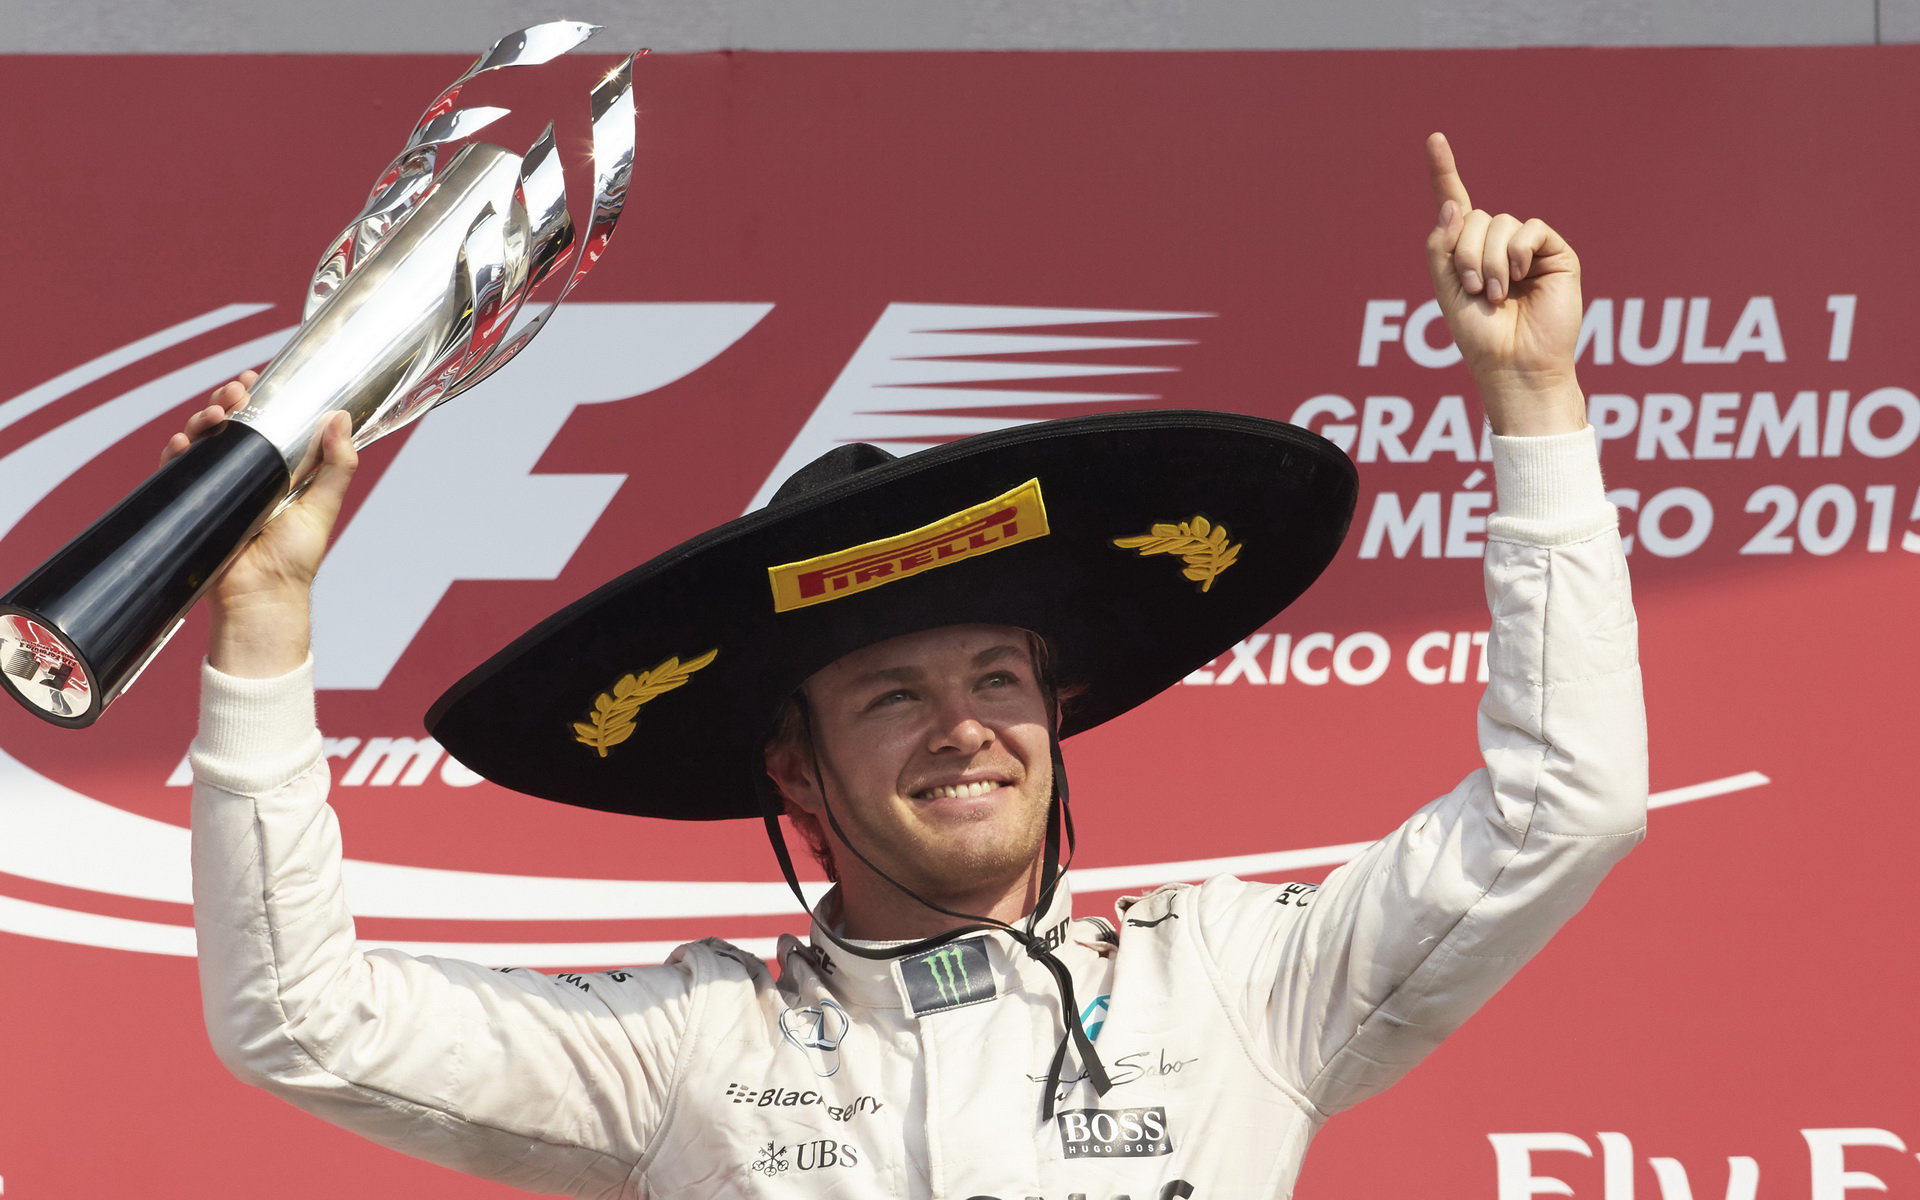 Dostal Rosberg od vedení týmu výhodu? Hamilton si to myslí.